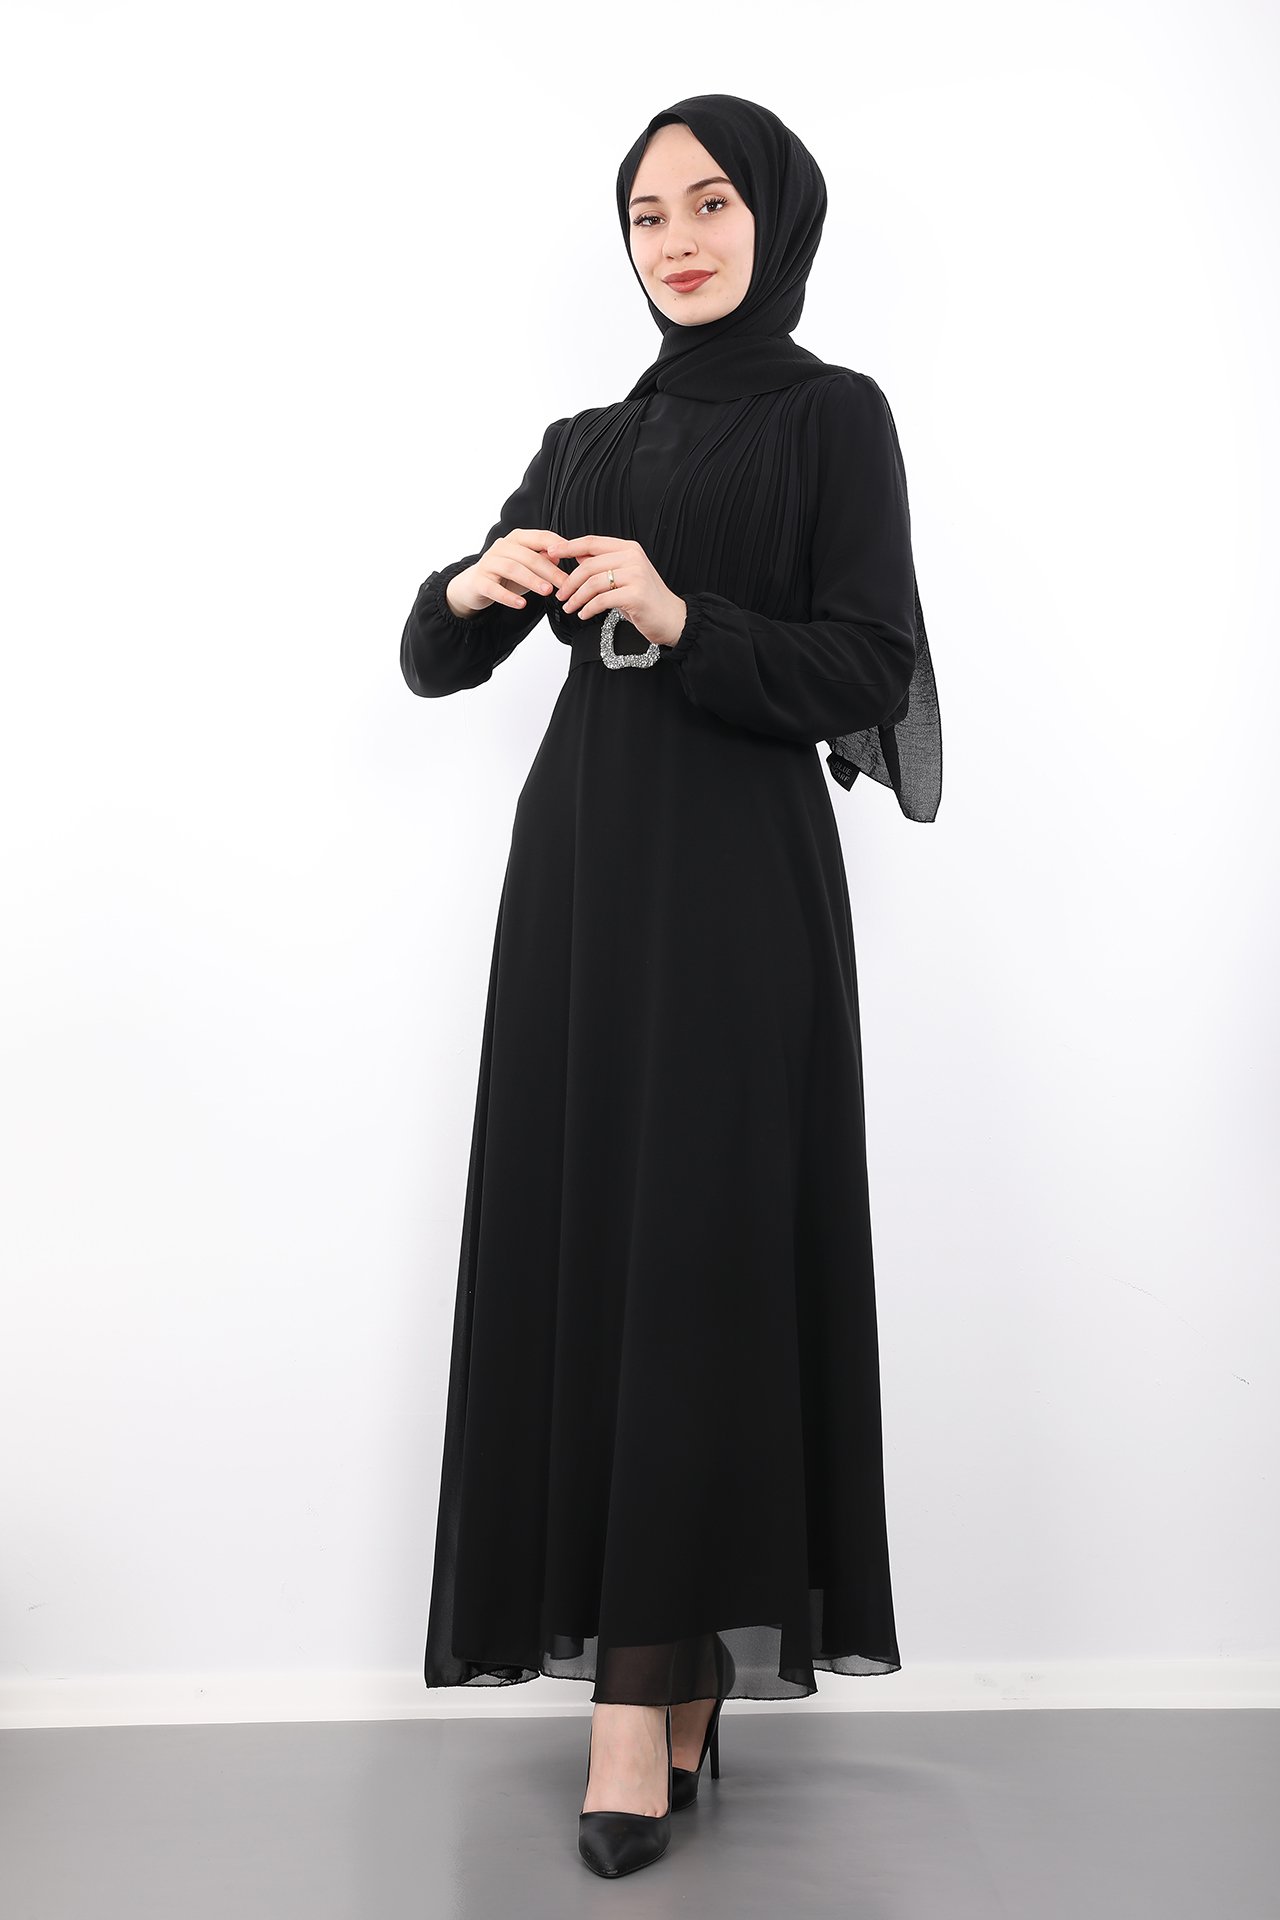 GİZAGİYİM - Taş Kemer Pilisoley Elbise Siyah